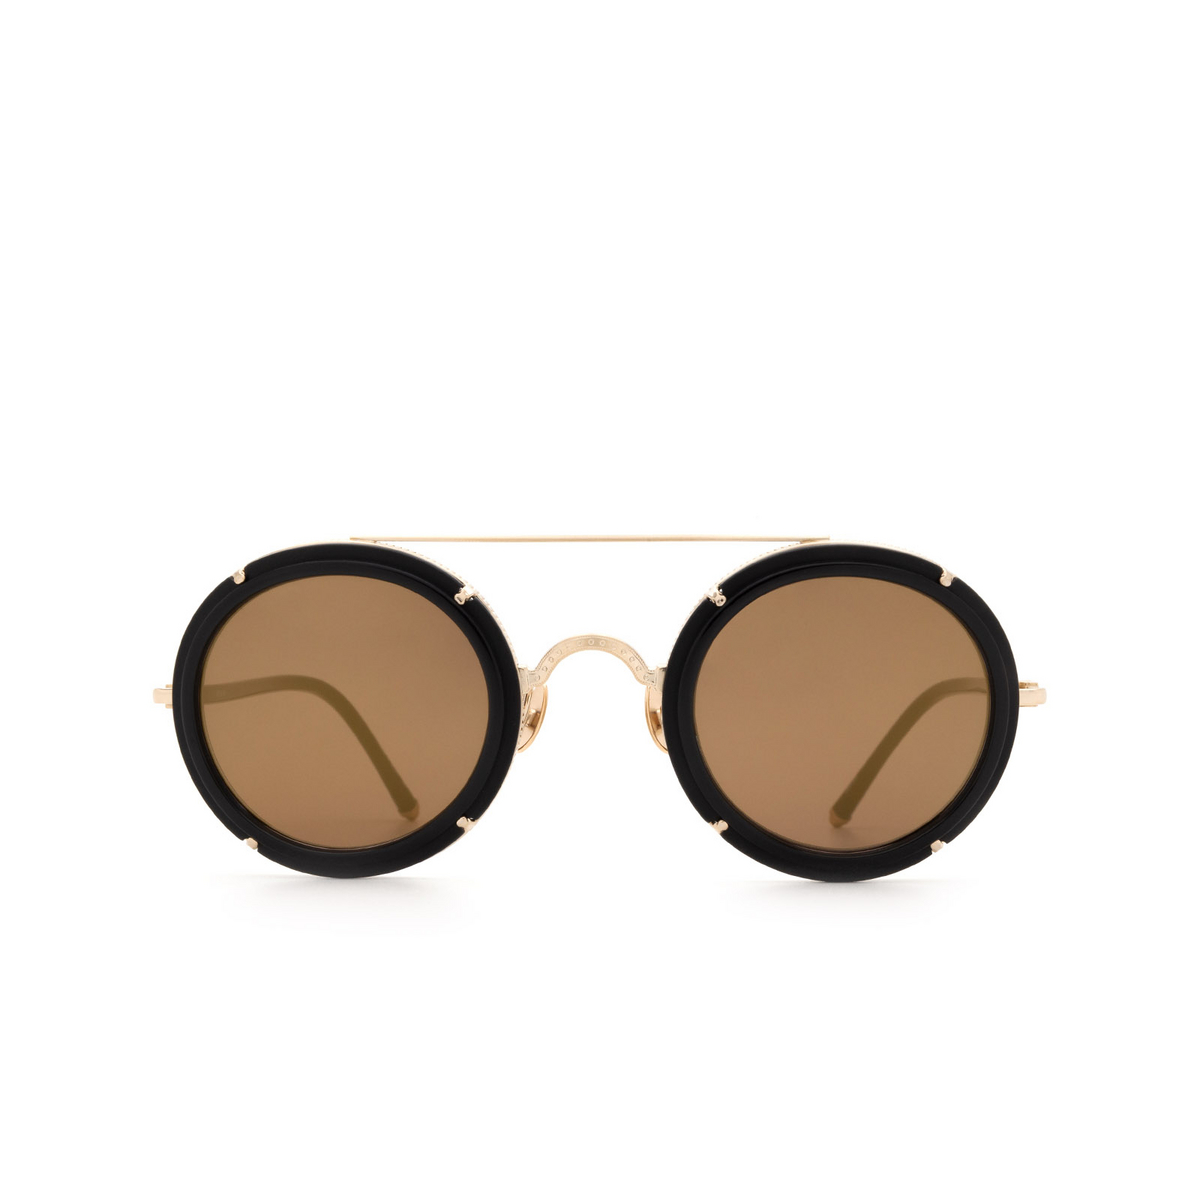 Matsuda® Round Sunglasses: M3080 color Matte Black / Brushed Gold Mbk-bg - front view.